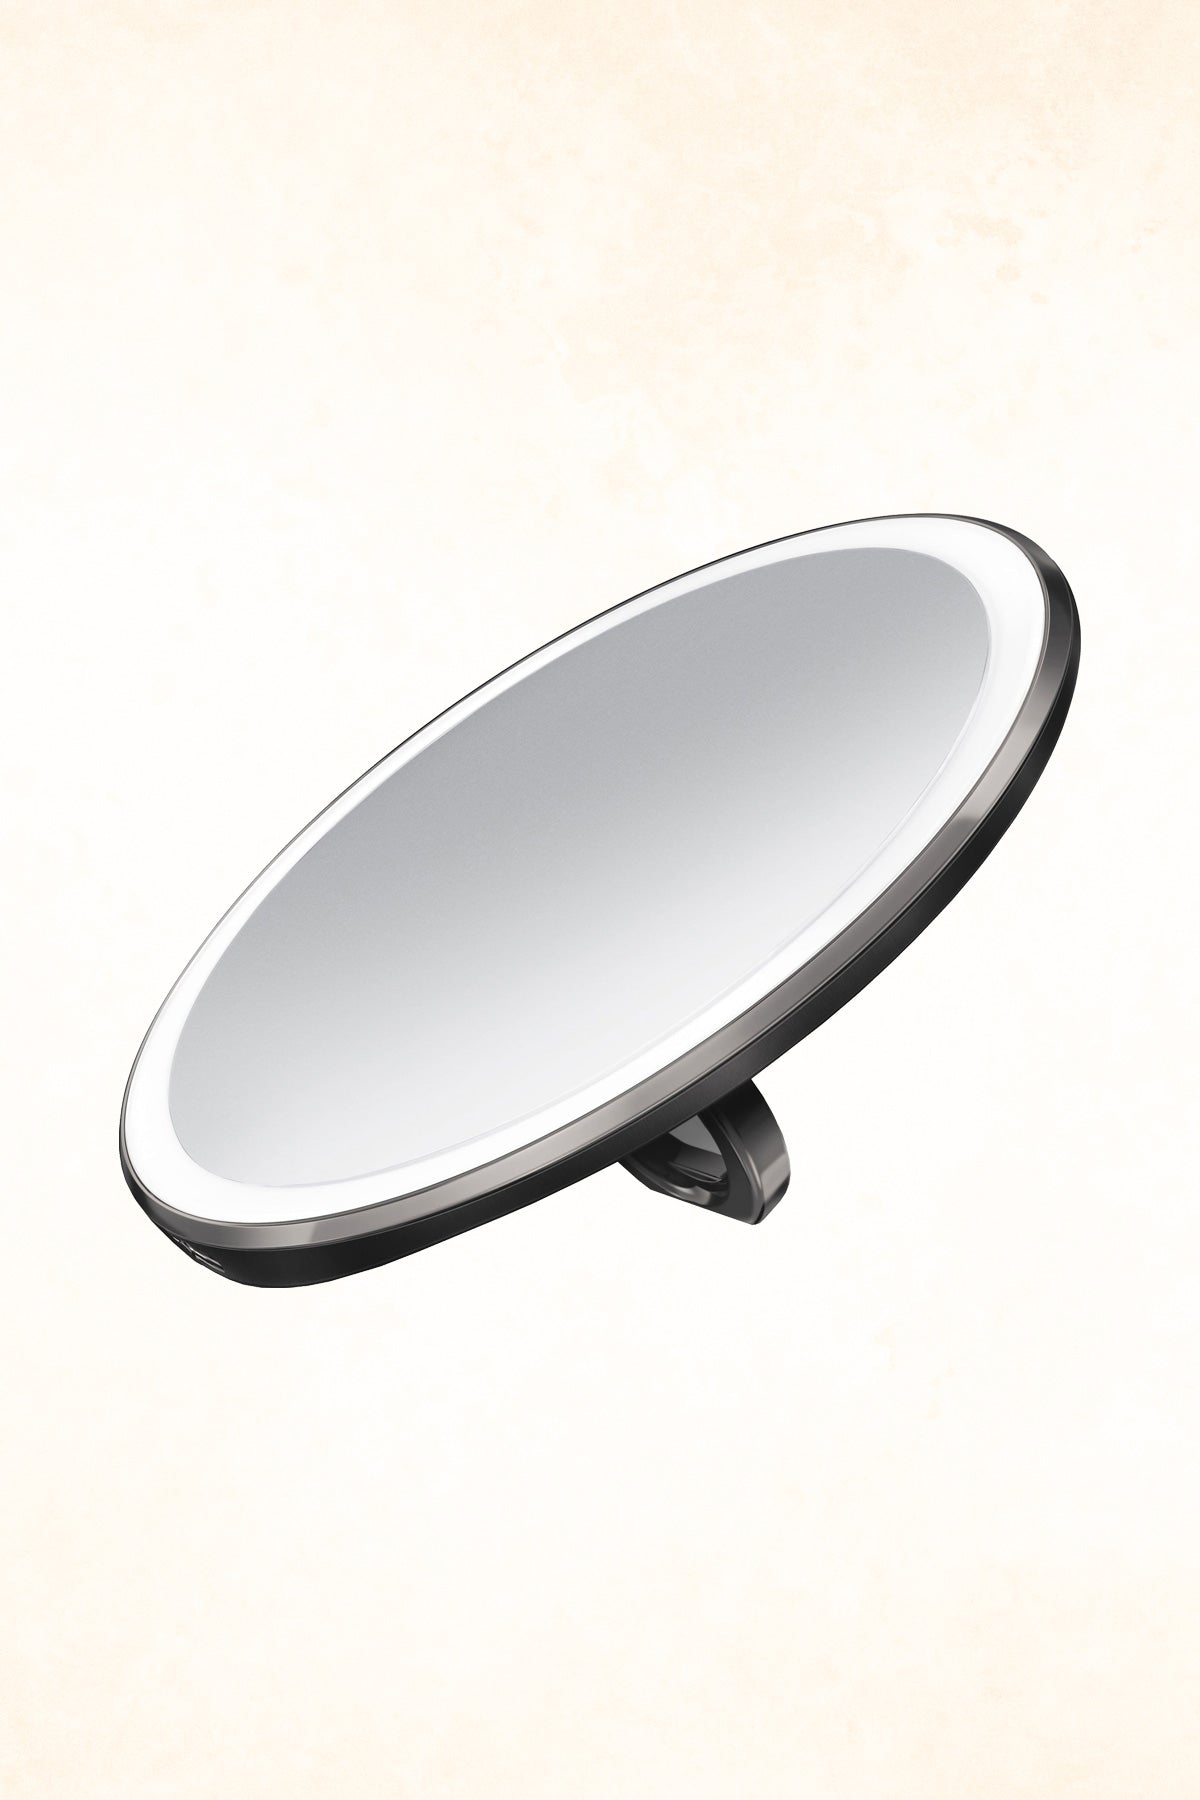 Simplehuman – Sensor Mirror Compact - 3 x Magnification - Sort